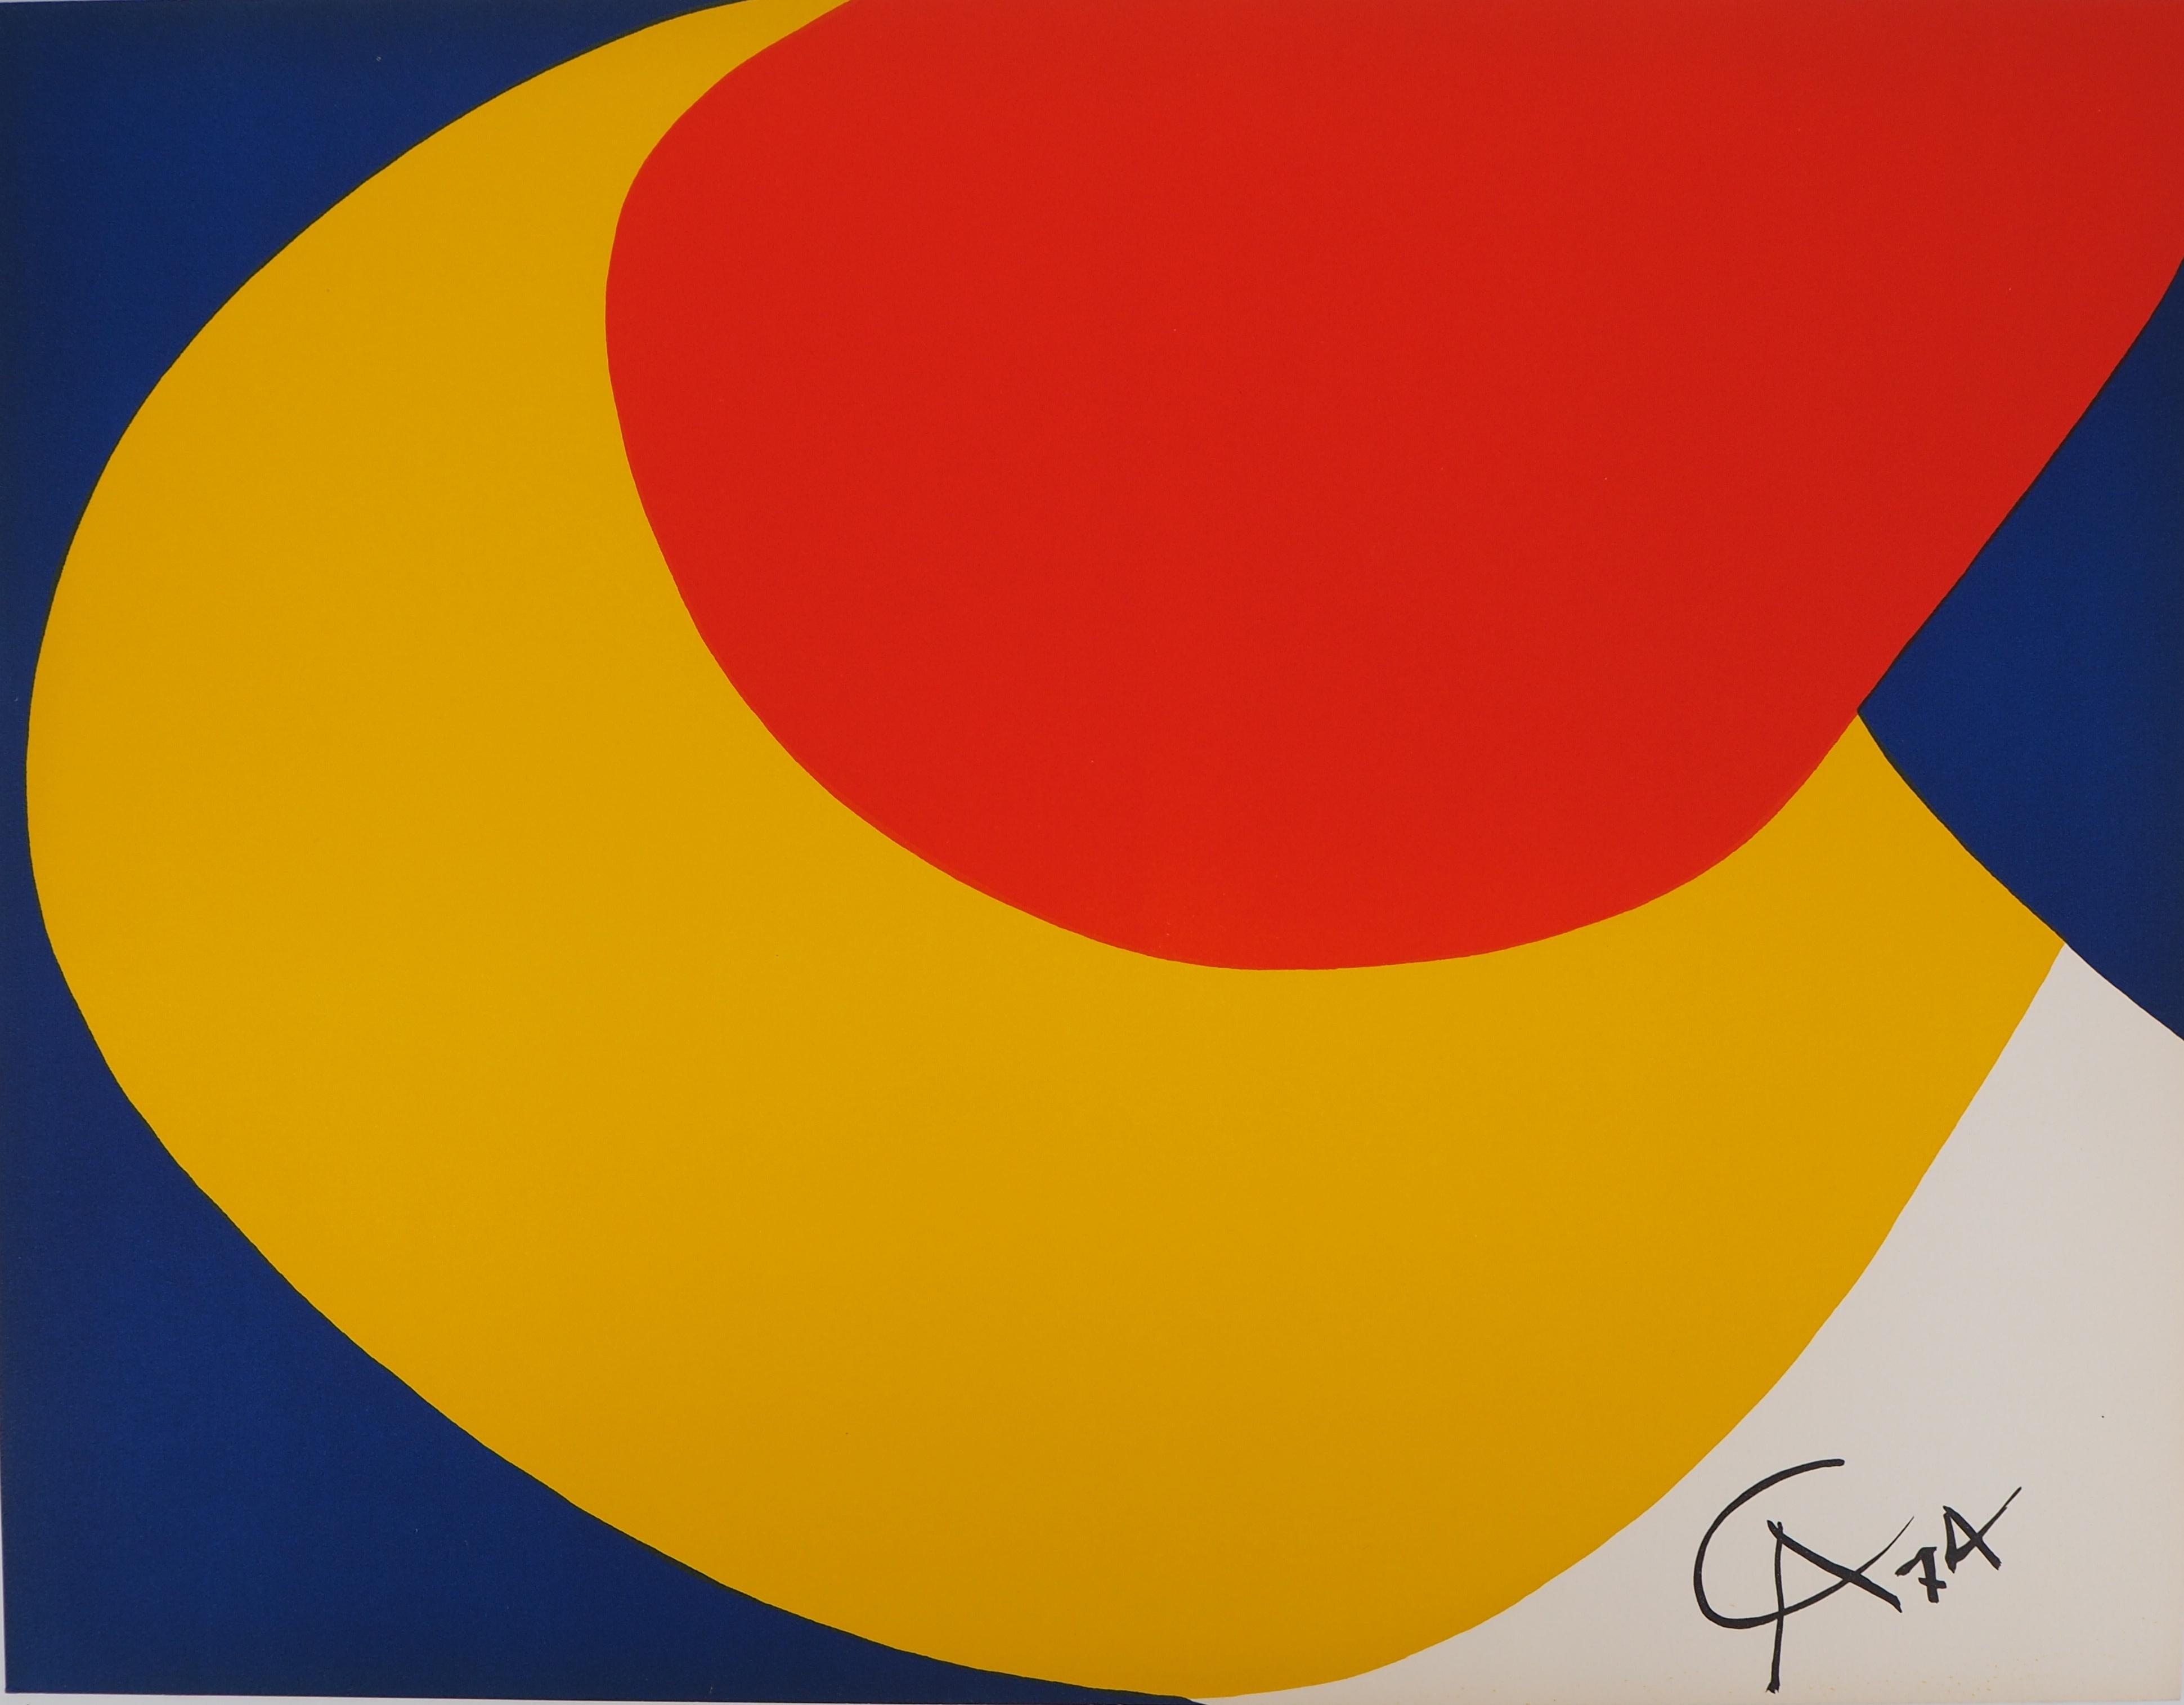 Alexander Calder Abstract Print – Yellow Crescent - Original lithograph, 1974